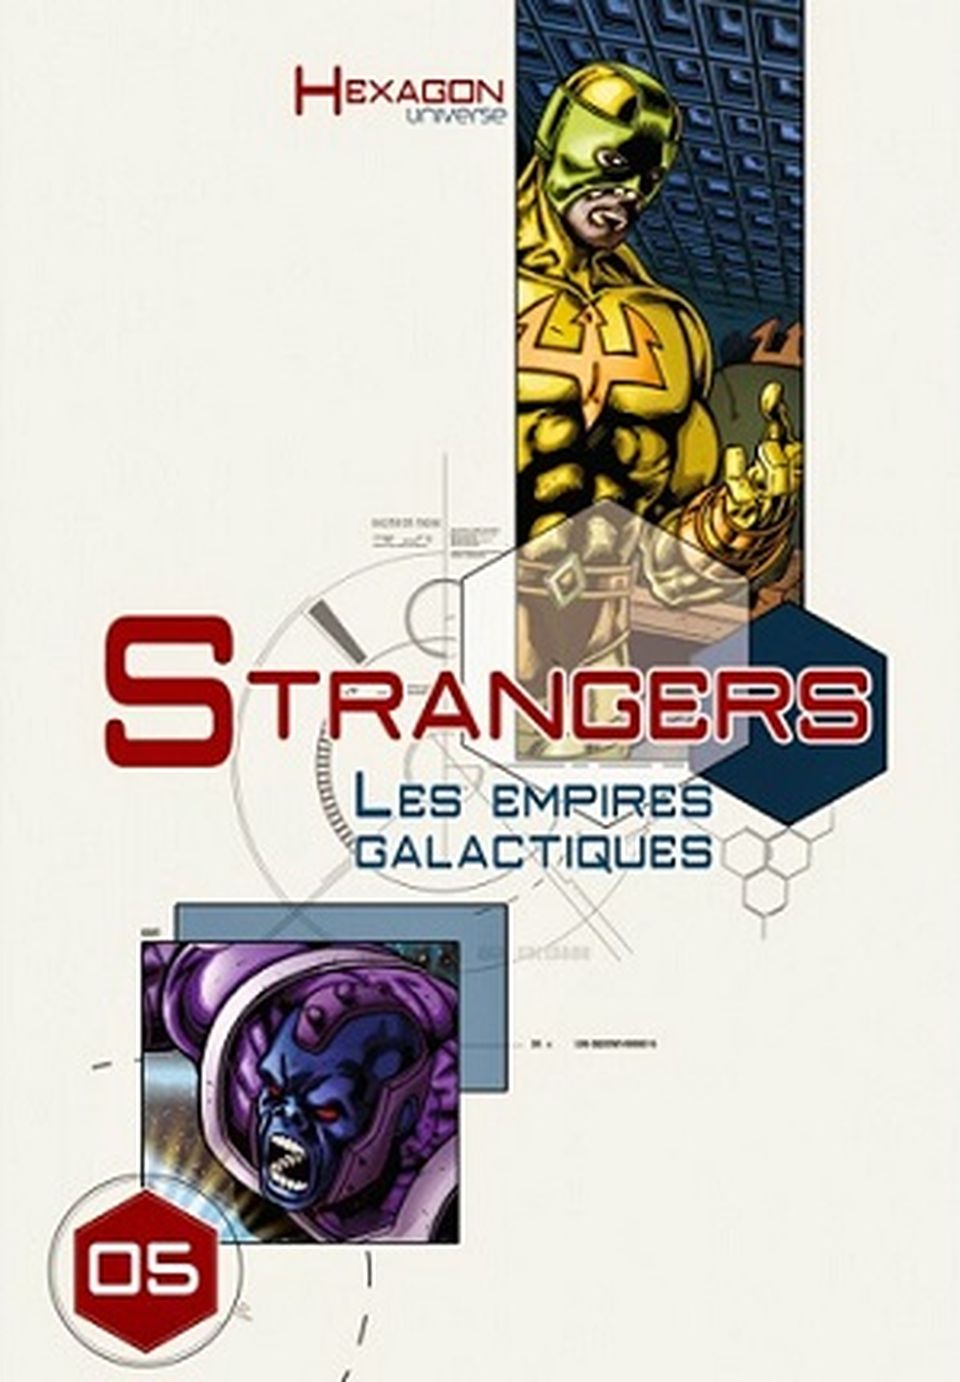 Hexagon Universe 05 : Strangers II Les Empires Galactiques image